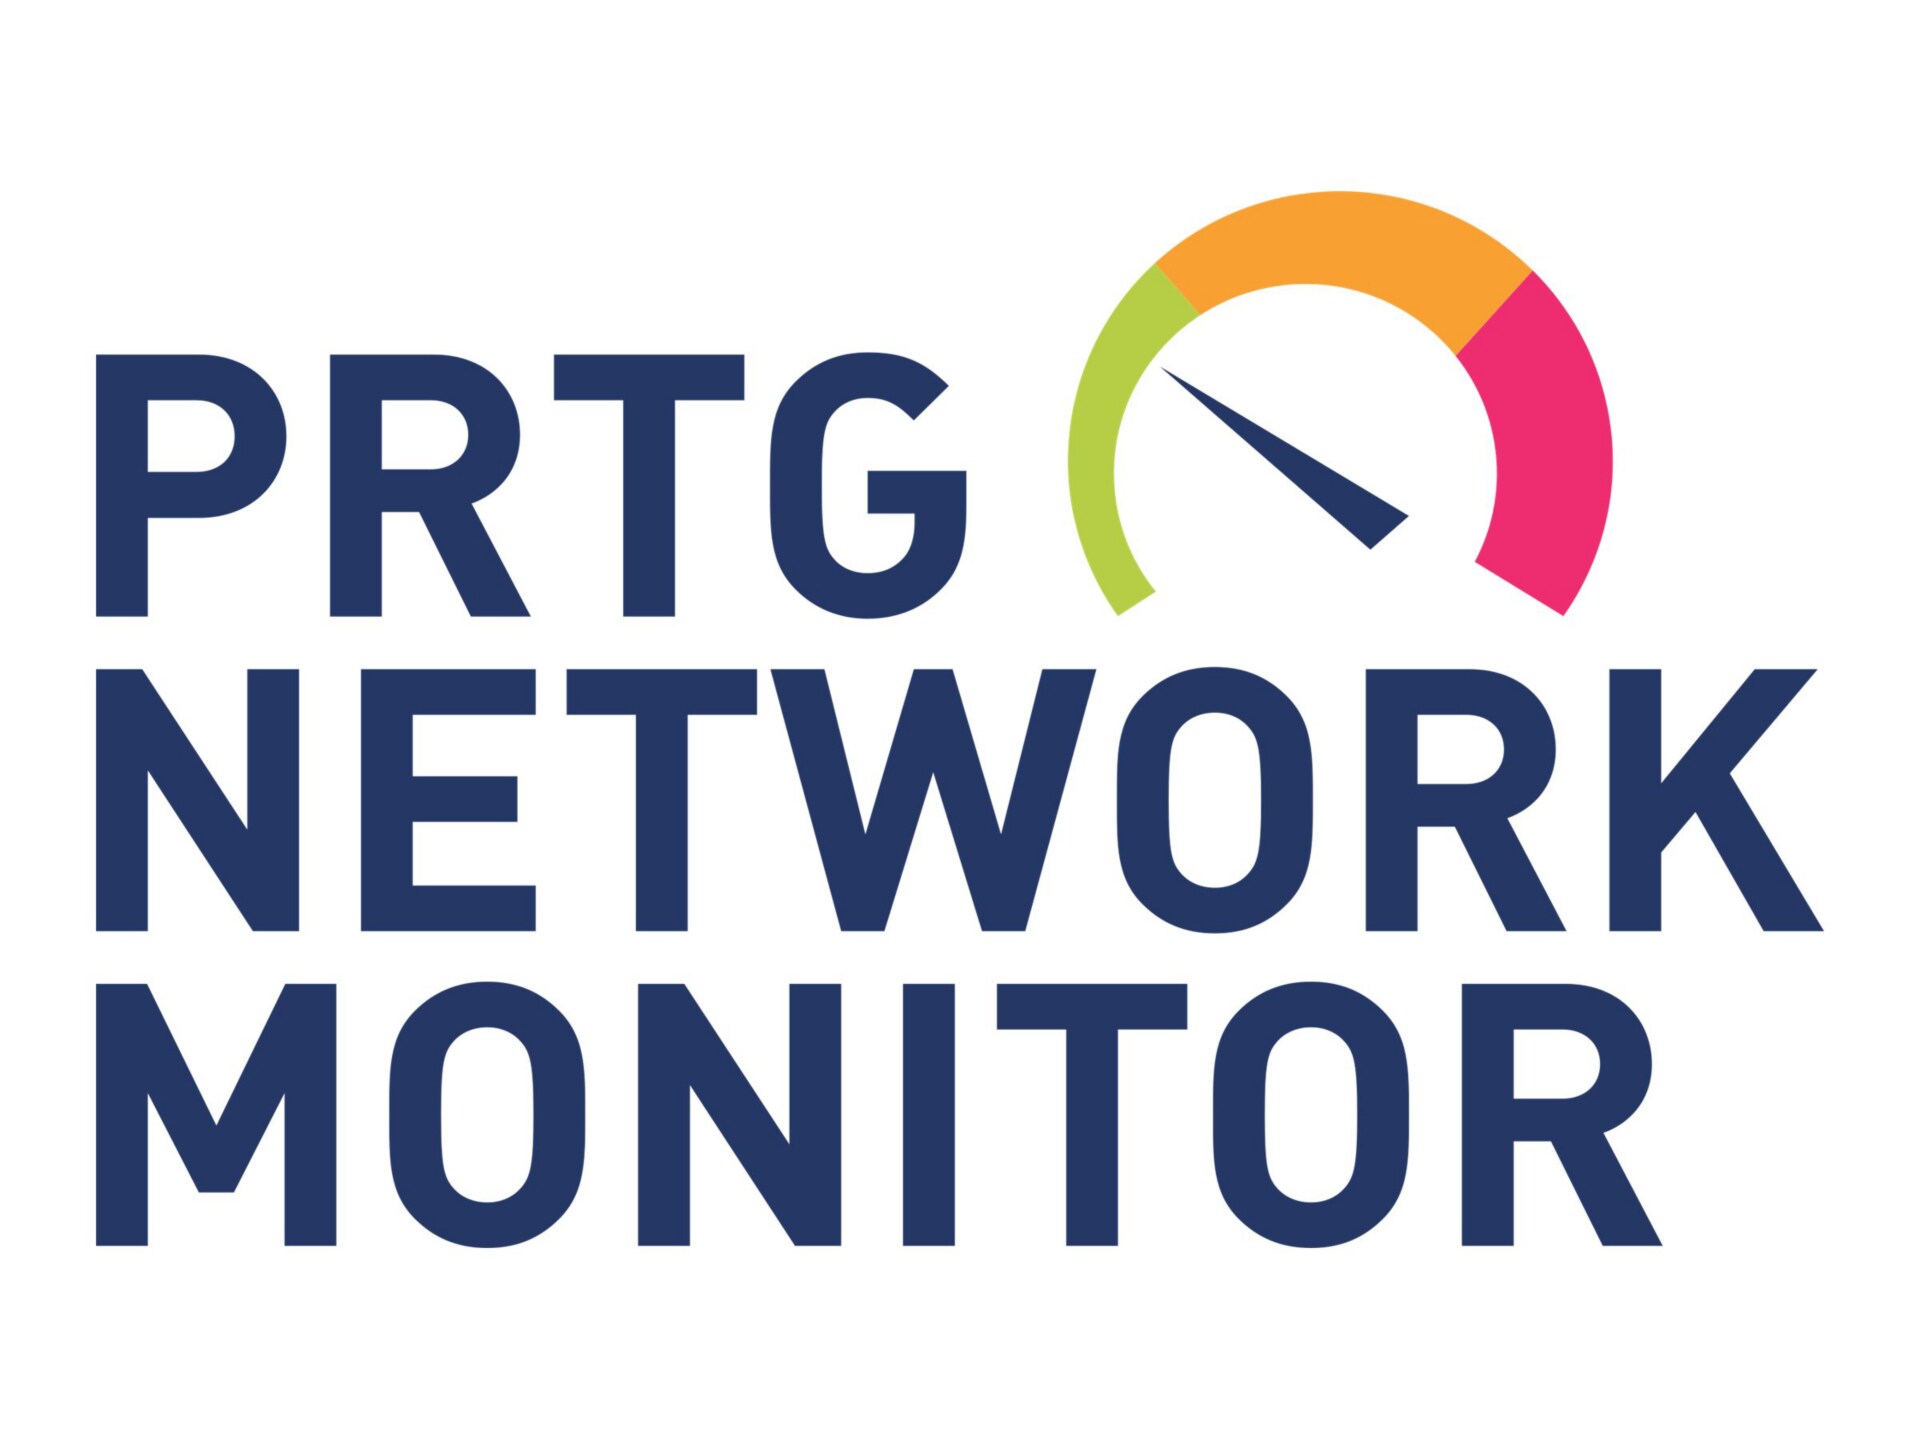 PRTG Network Monitor - license + 2 Years Maintenance - 5000 sensors